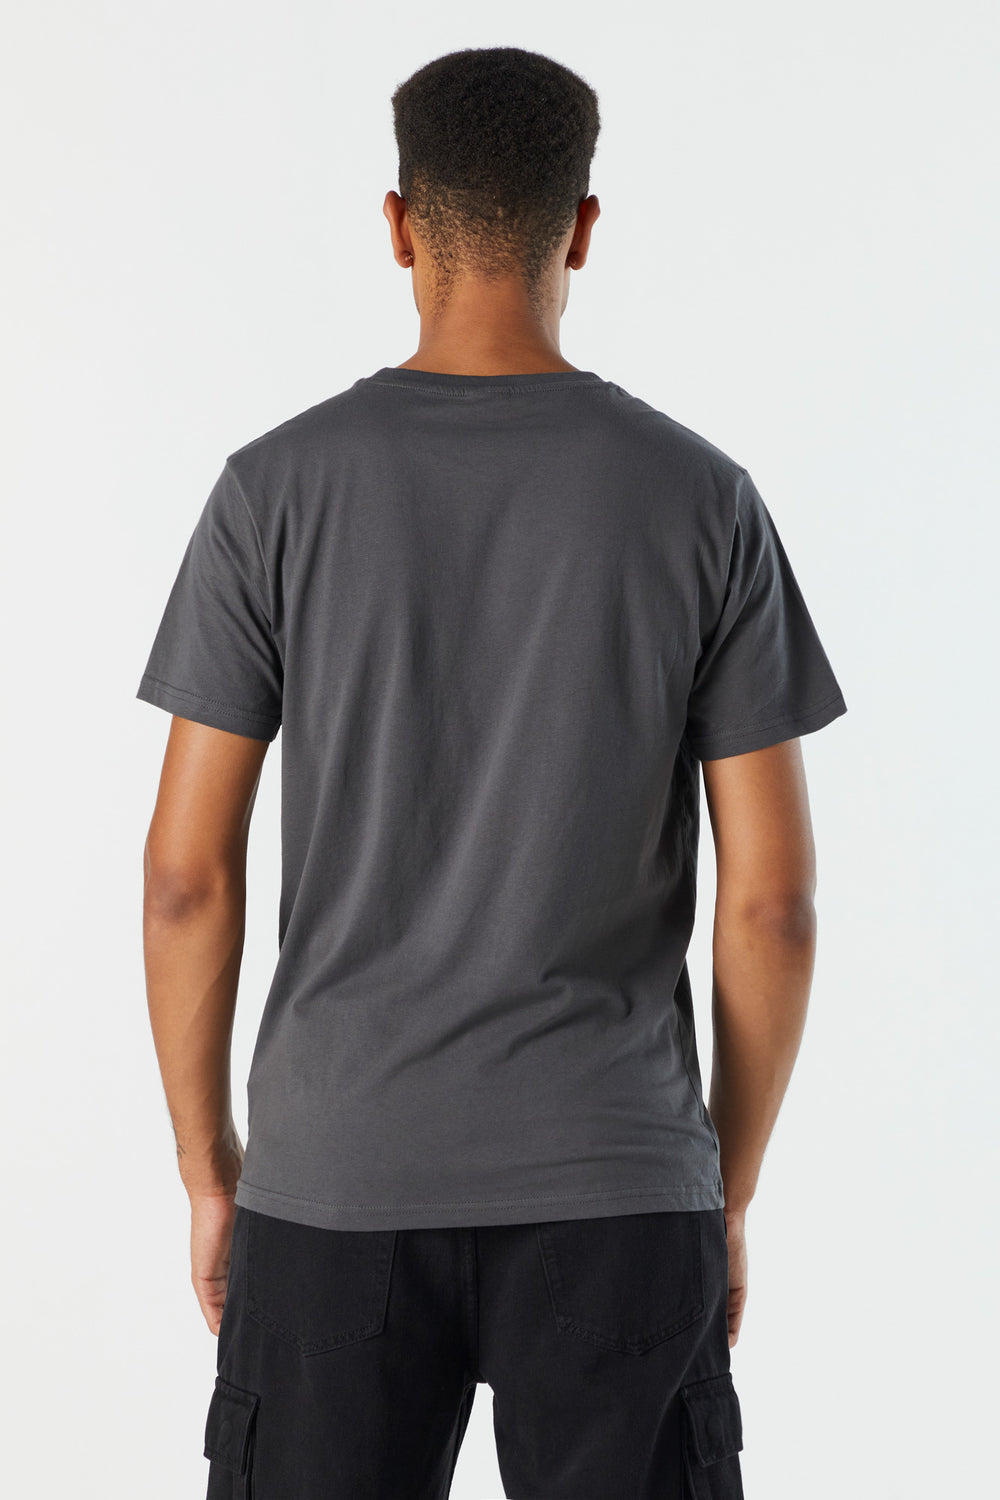 GOAT Graphic T-Shirt GOAT Graphic T-Shirt 3